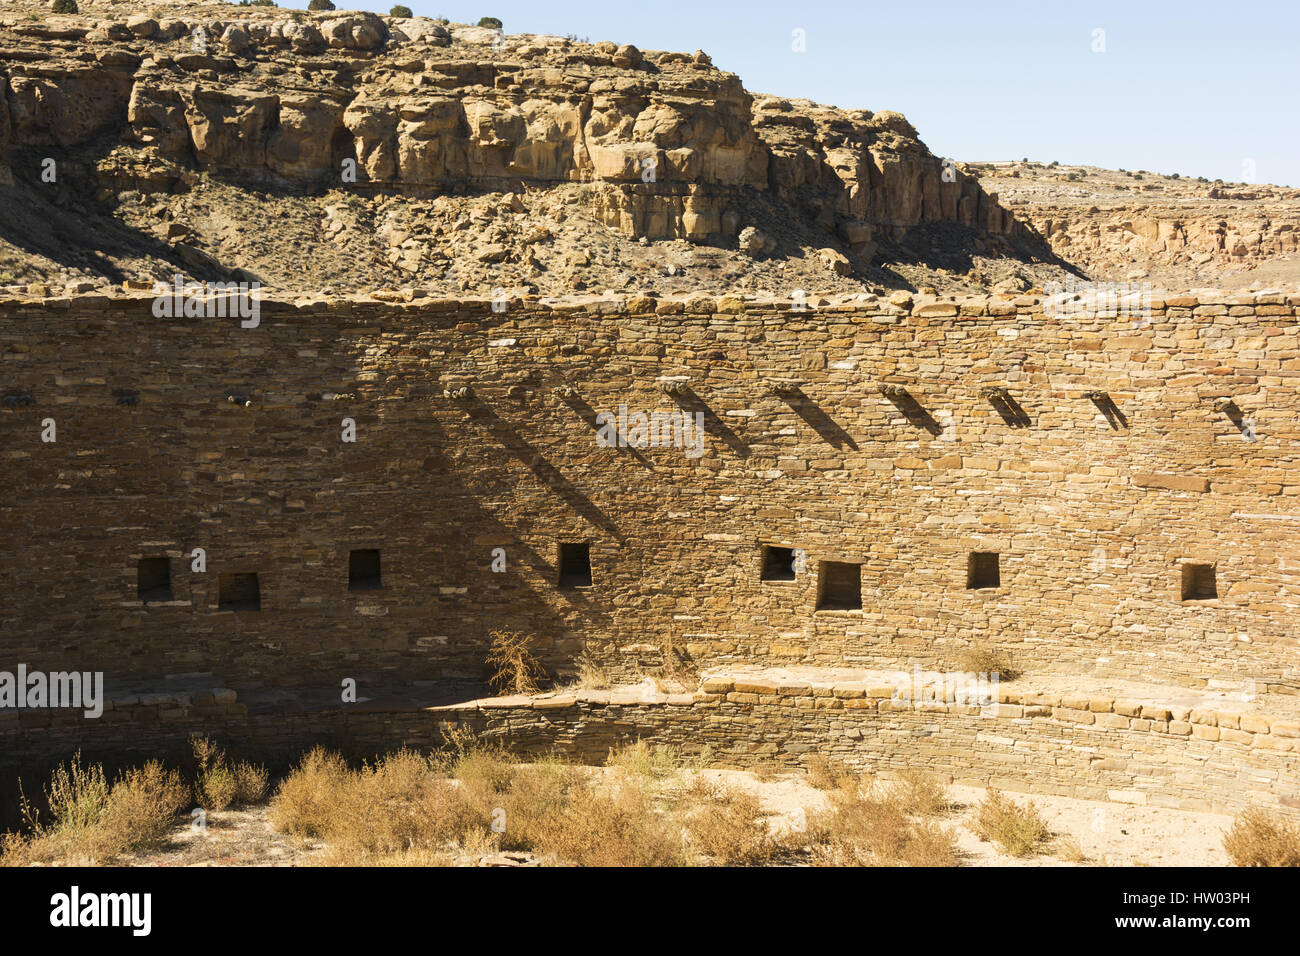 New Mexico, Chaco Culture National Historical Park, Casa Rinconada, Ancestral Puebloan kiva ruins, UNESCO World Heritage Site Stock Photo